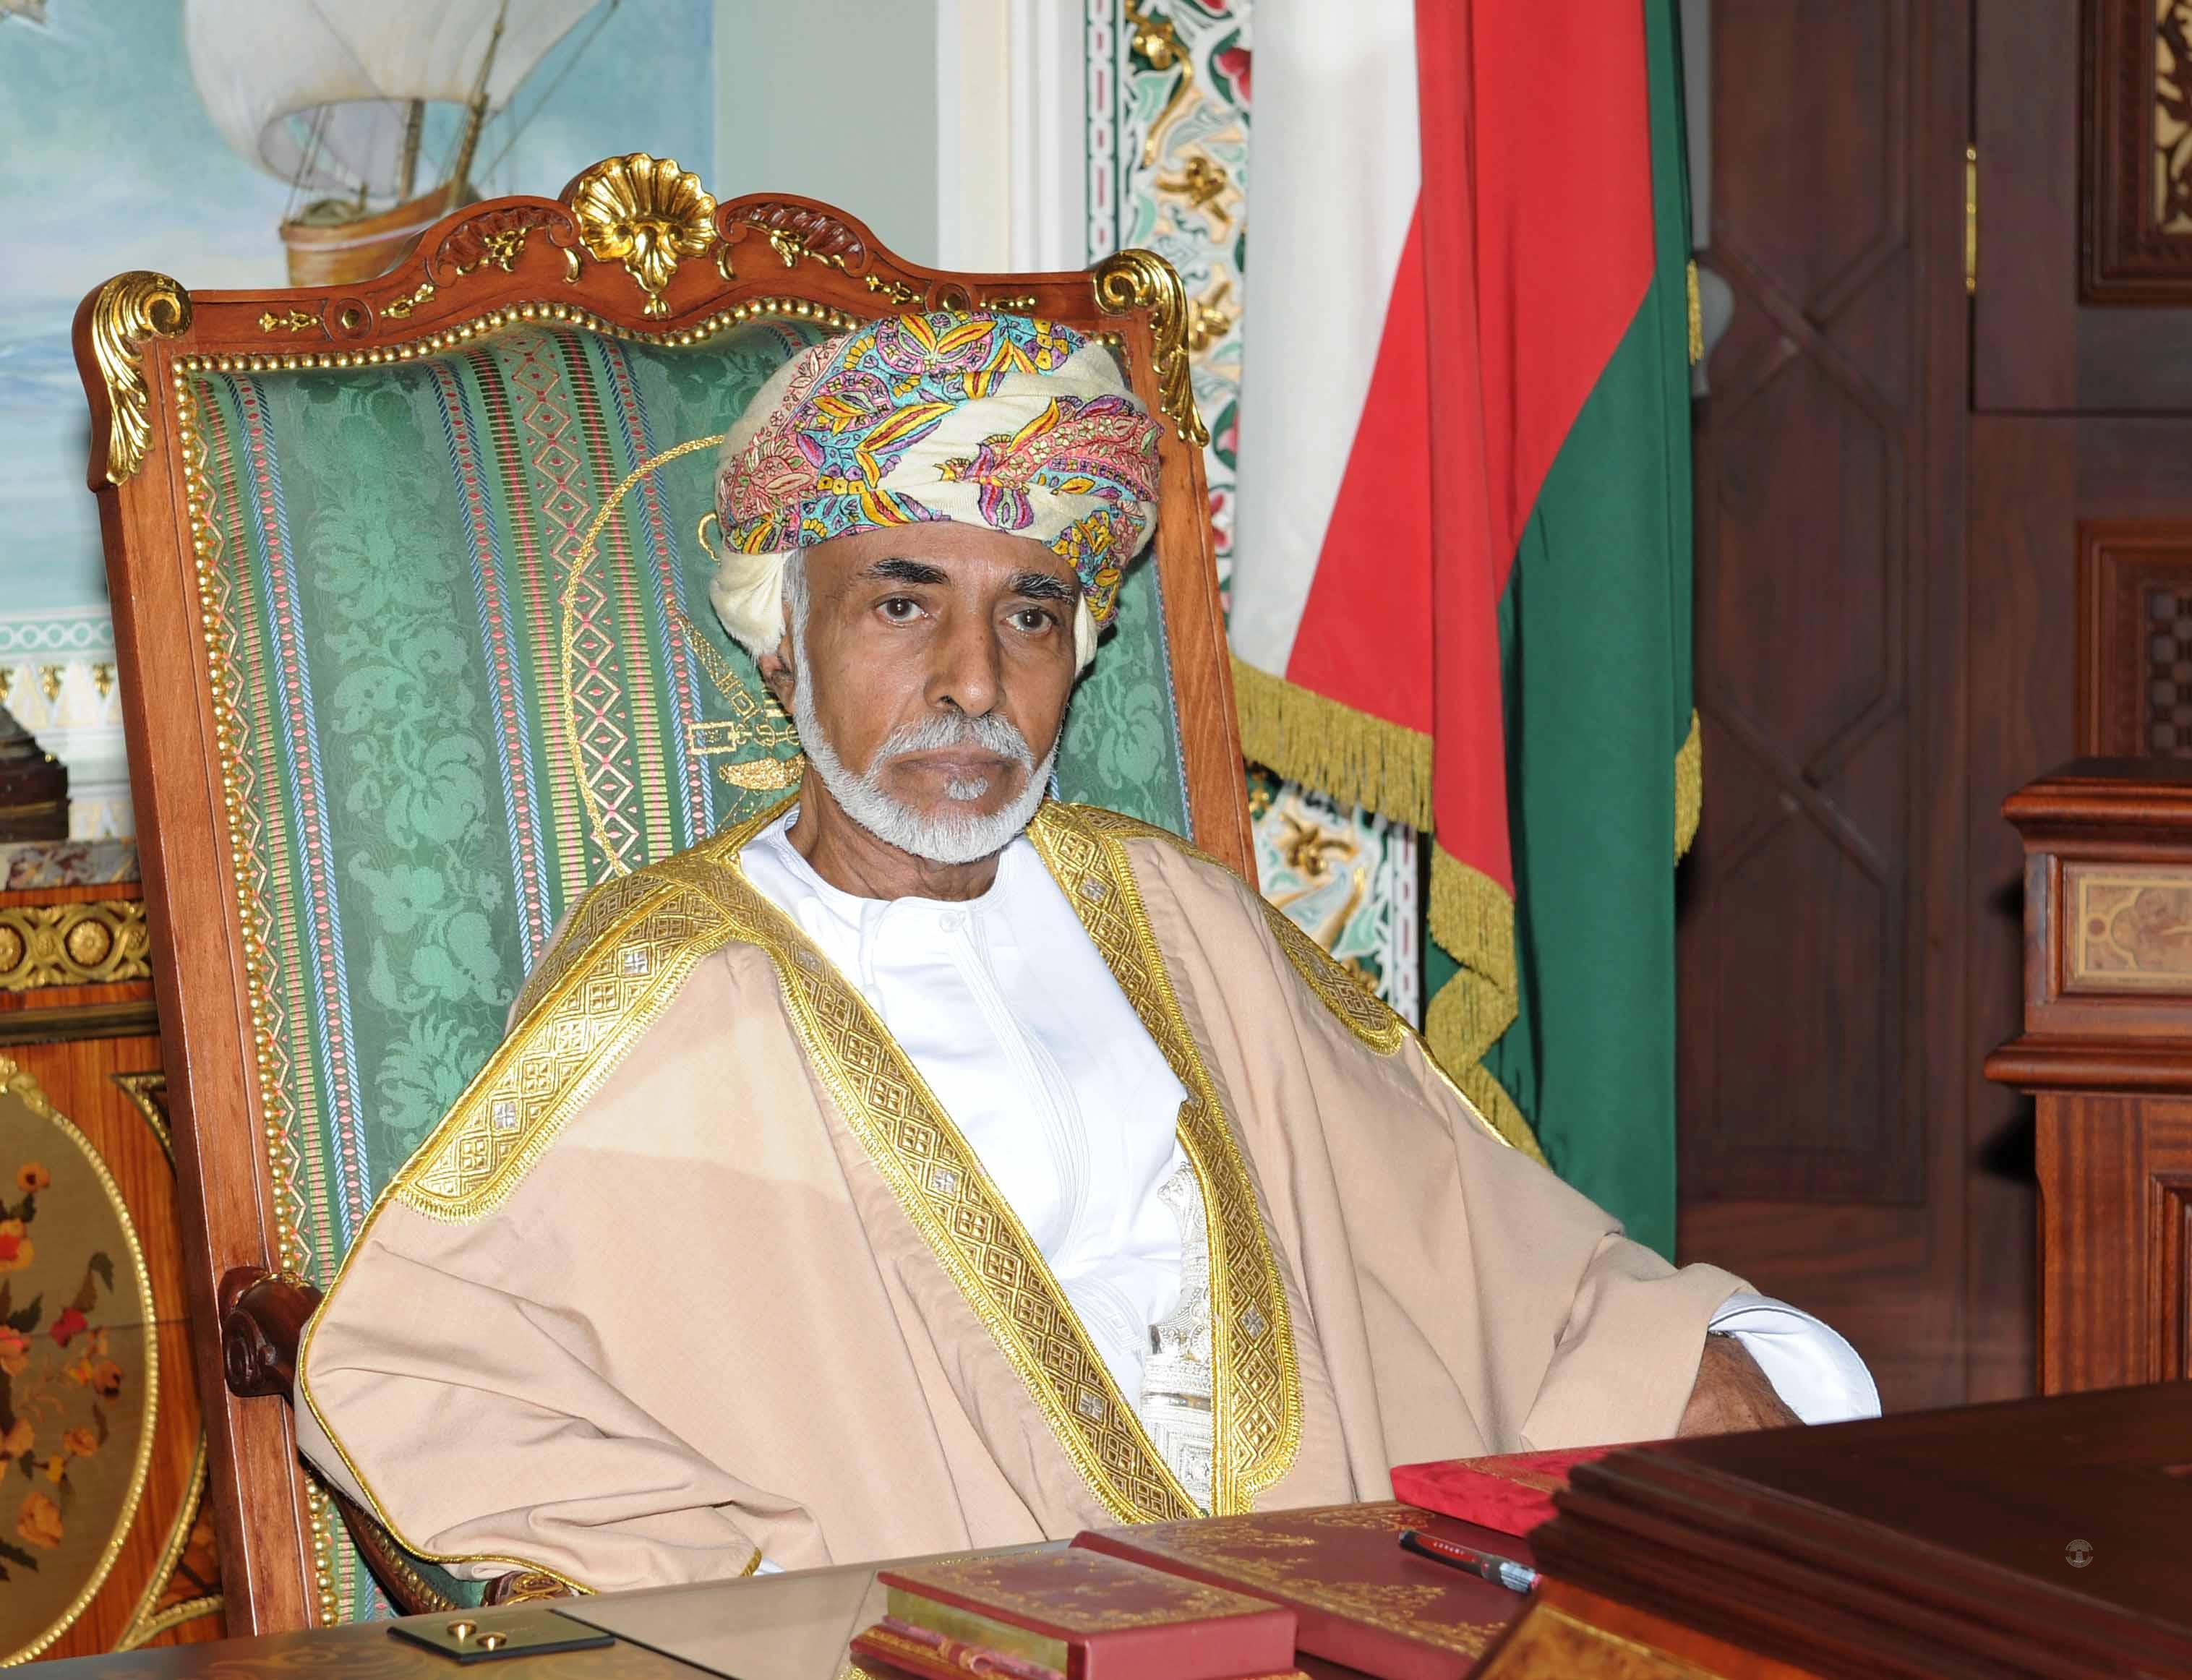 His Majesty Sultan Qaboos sends greetings to Uganda